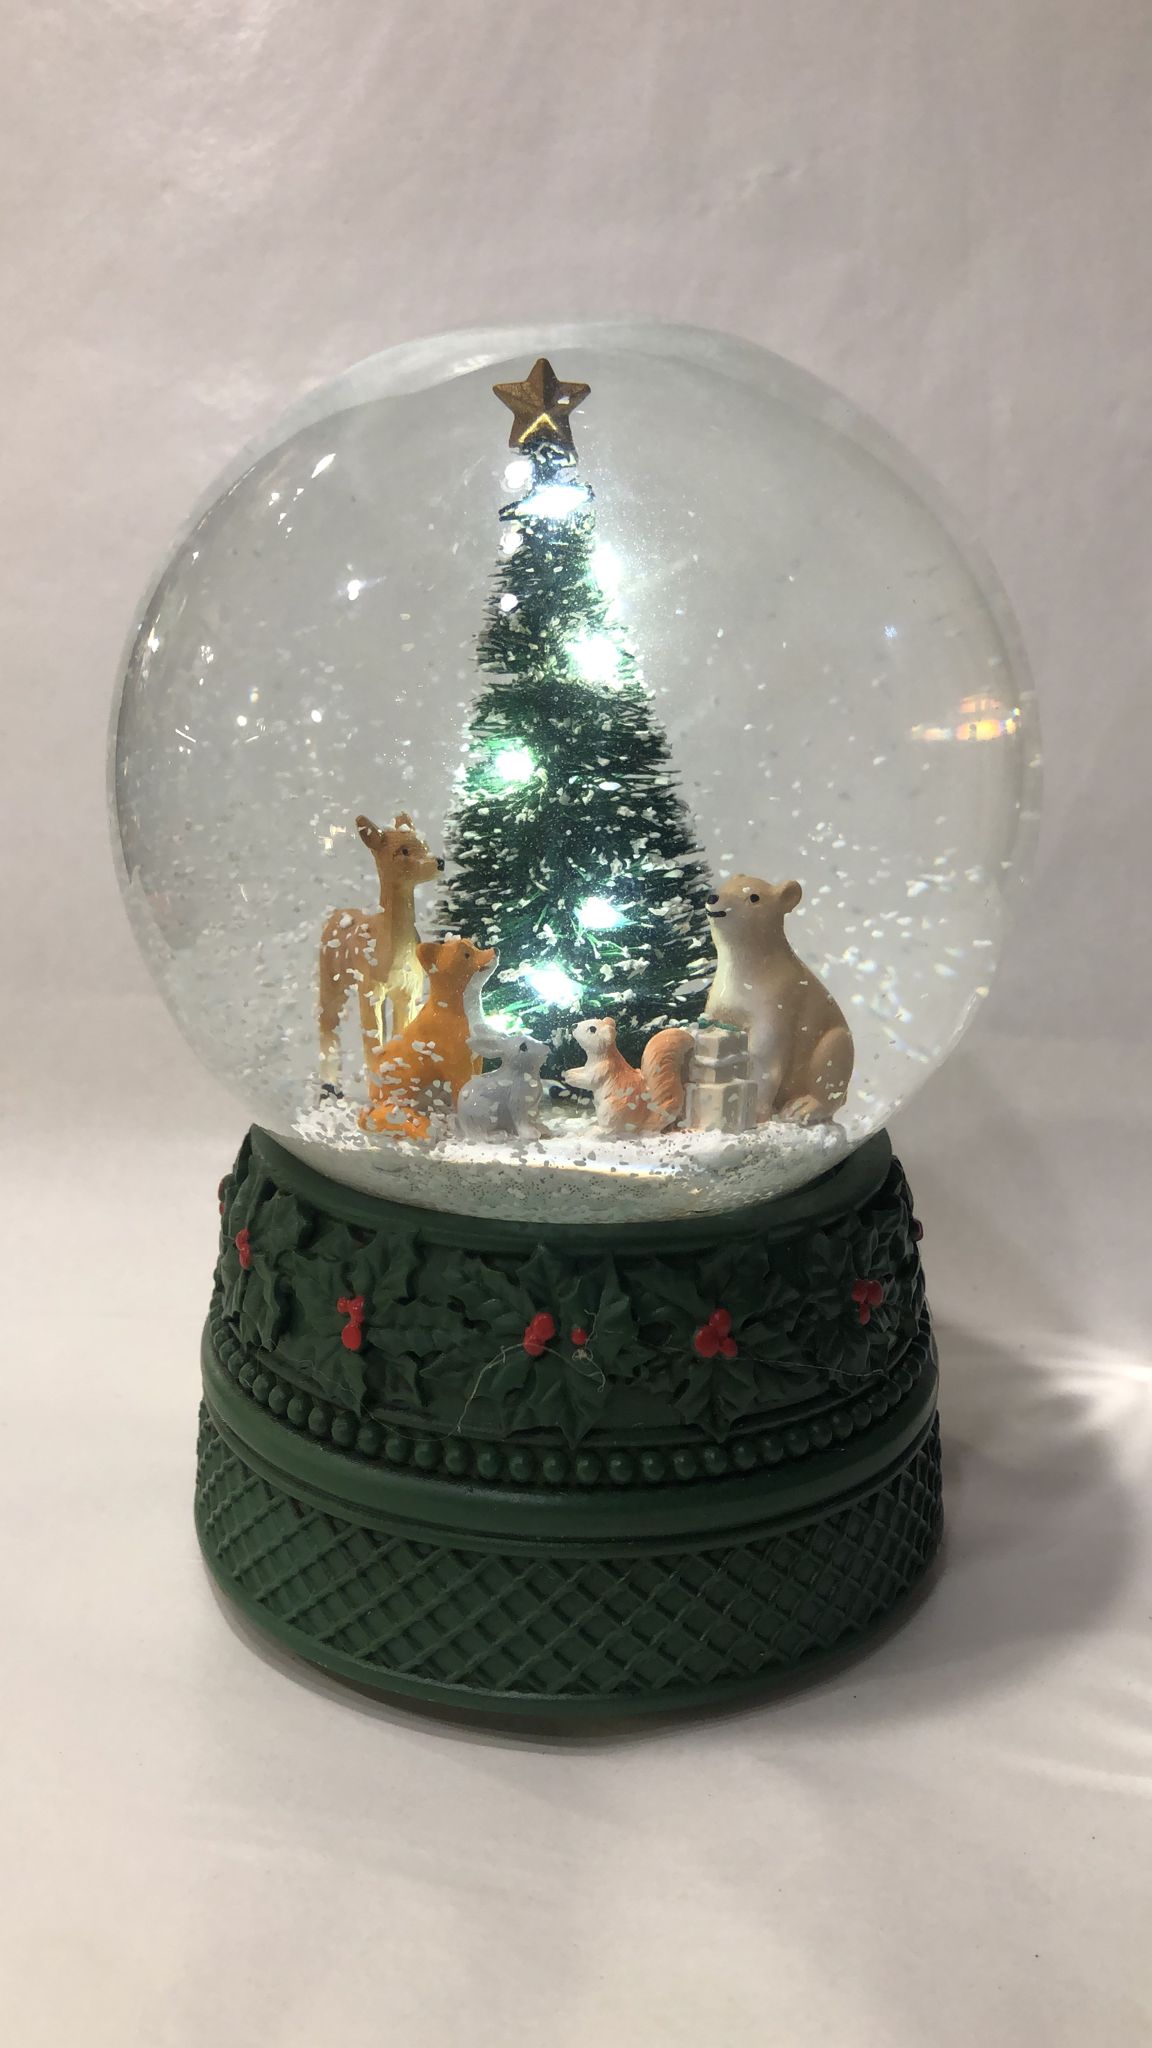 Snow globe with animals under the tree